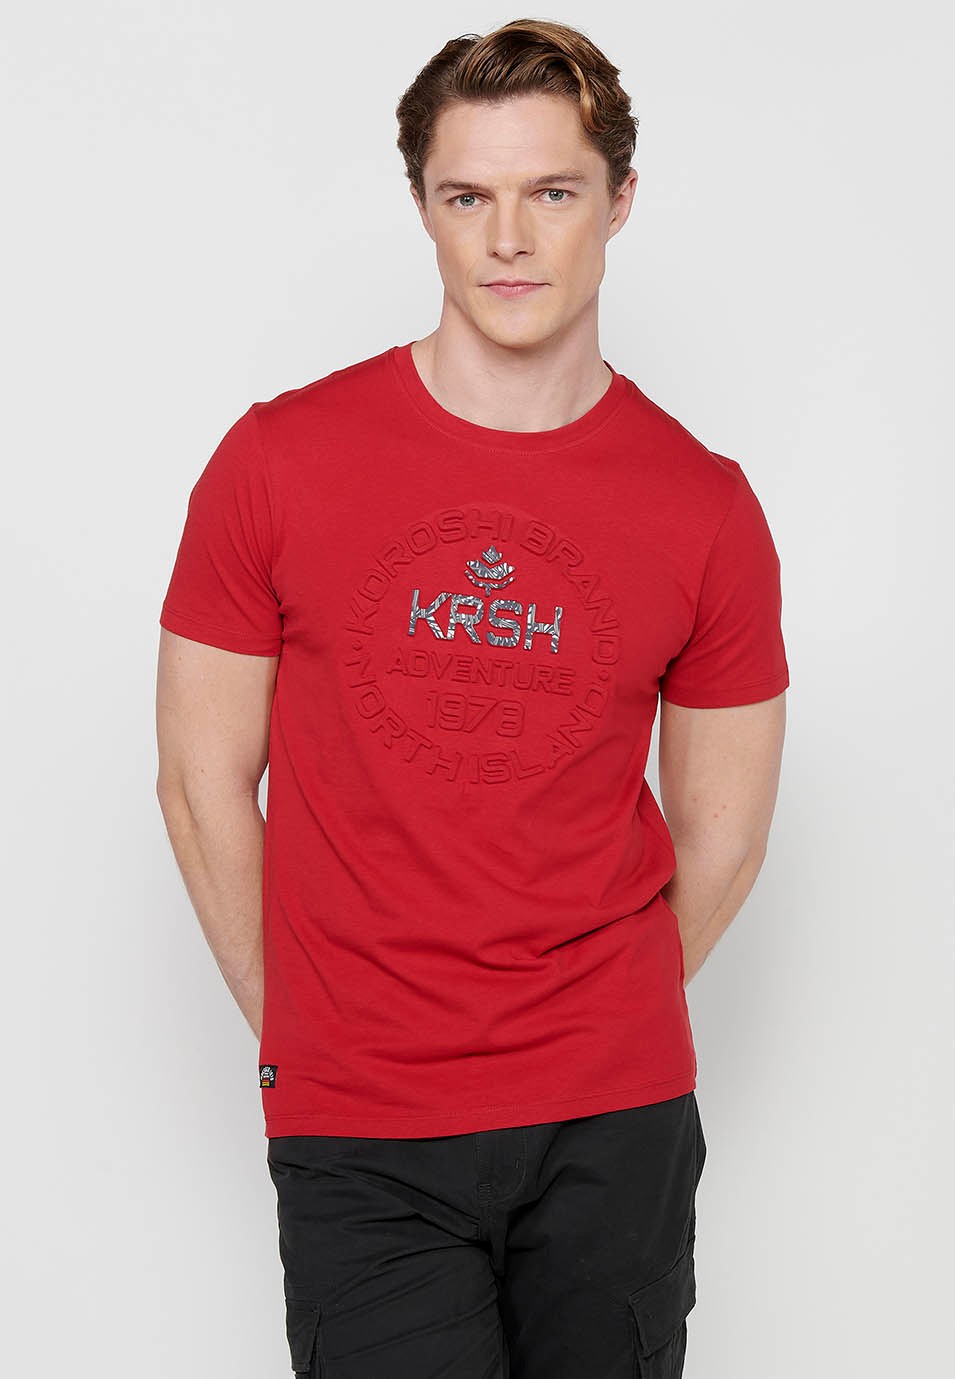 Men's Red Color Round Neck Cotton Short Sleeve T-shirt 2